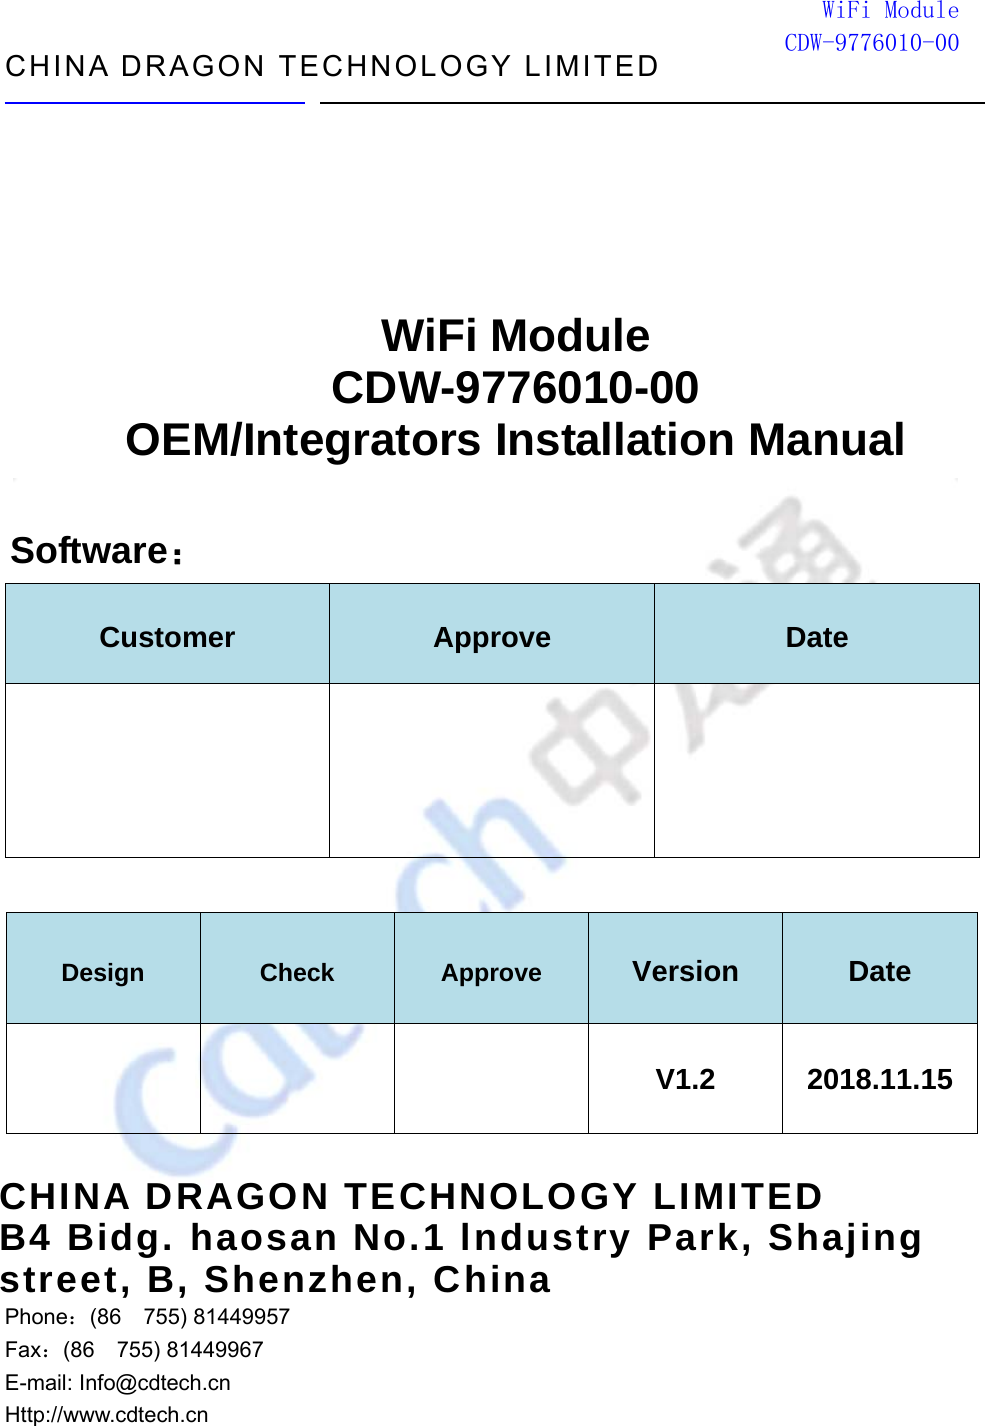  CHINA DRAGON TECHNOLOGY LIMITED                                                                             WiFi ModuleCDW-9776010-00     WiFi Module CDW-9776010-00  OEM/Integrators Installation Manual  Software： Customer  Approve  Date      CHINA DRAGON TECHNOLOGY LIMITED B4 Bidg. haosan No.1 lndustry Park, Shajing street, B, Shenzhen, China Phone：(86  755) 81449957 Fax：(86  755) 81449967 E-mail: Info@cdtech.cn                             Http://www.cdtech.cn                                     Design Check Approve Version  Date       V1.2 2018.11.15 